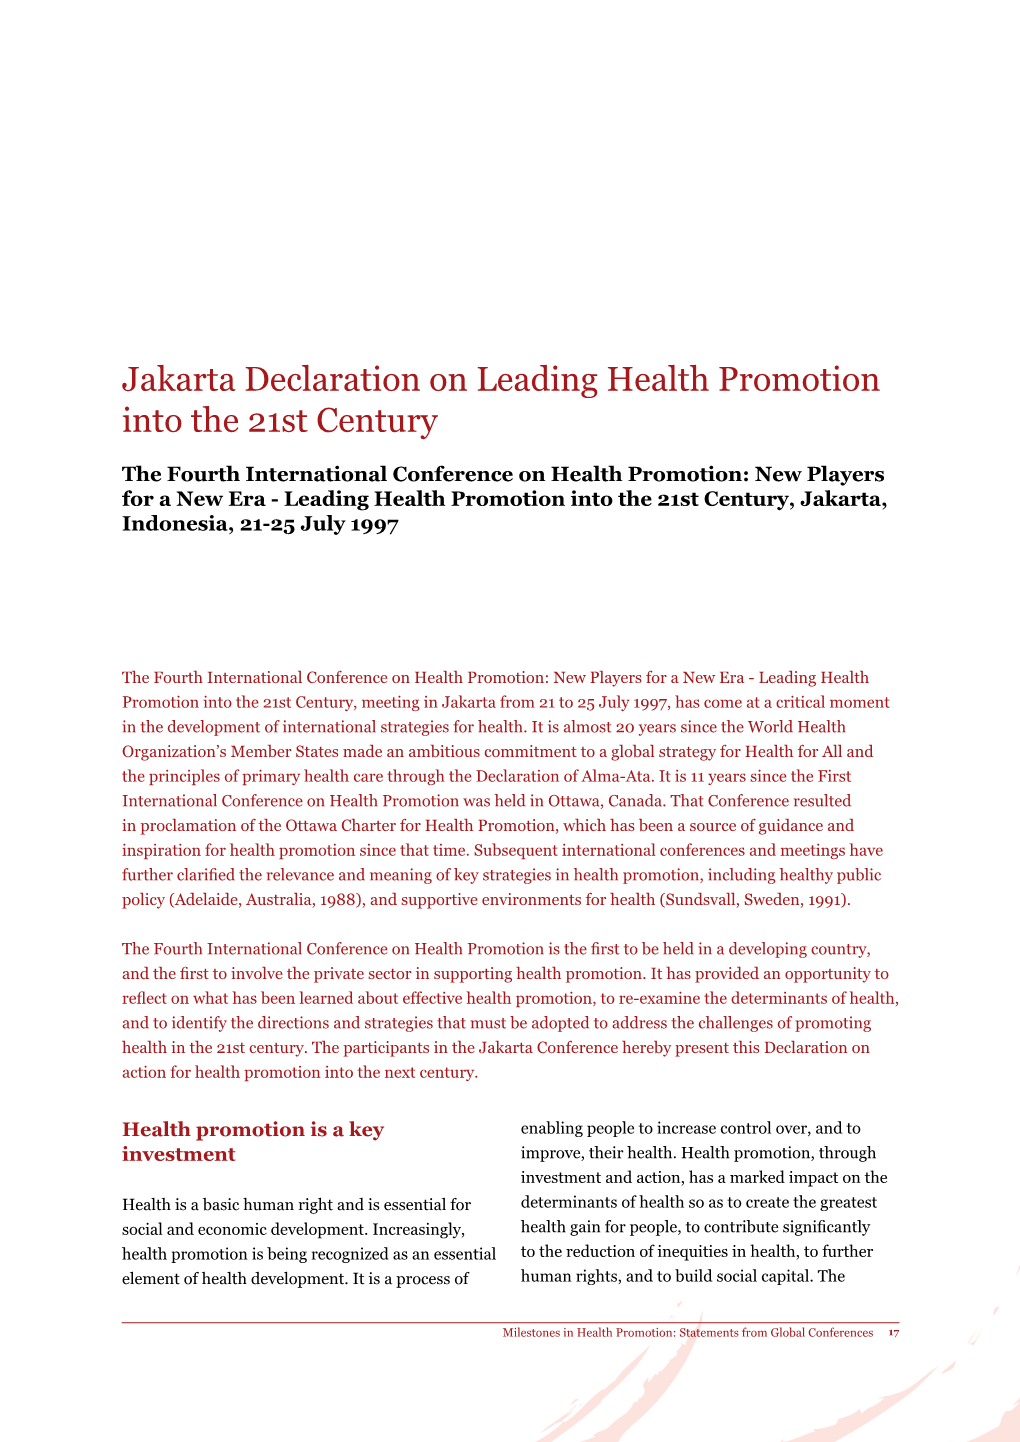 Jakarta Declaration on Leading Health Promotion Into the 21St Century